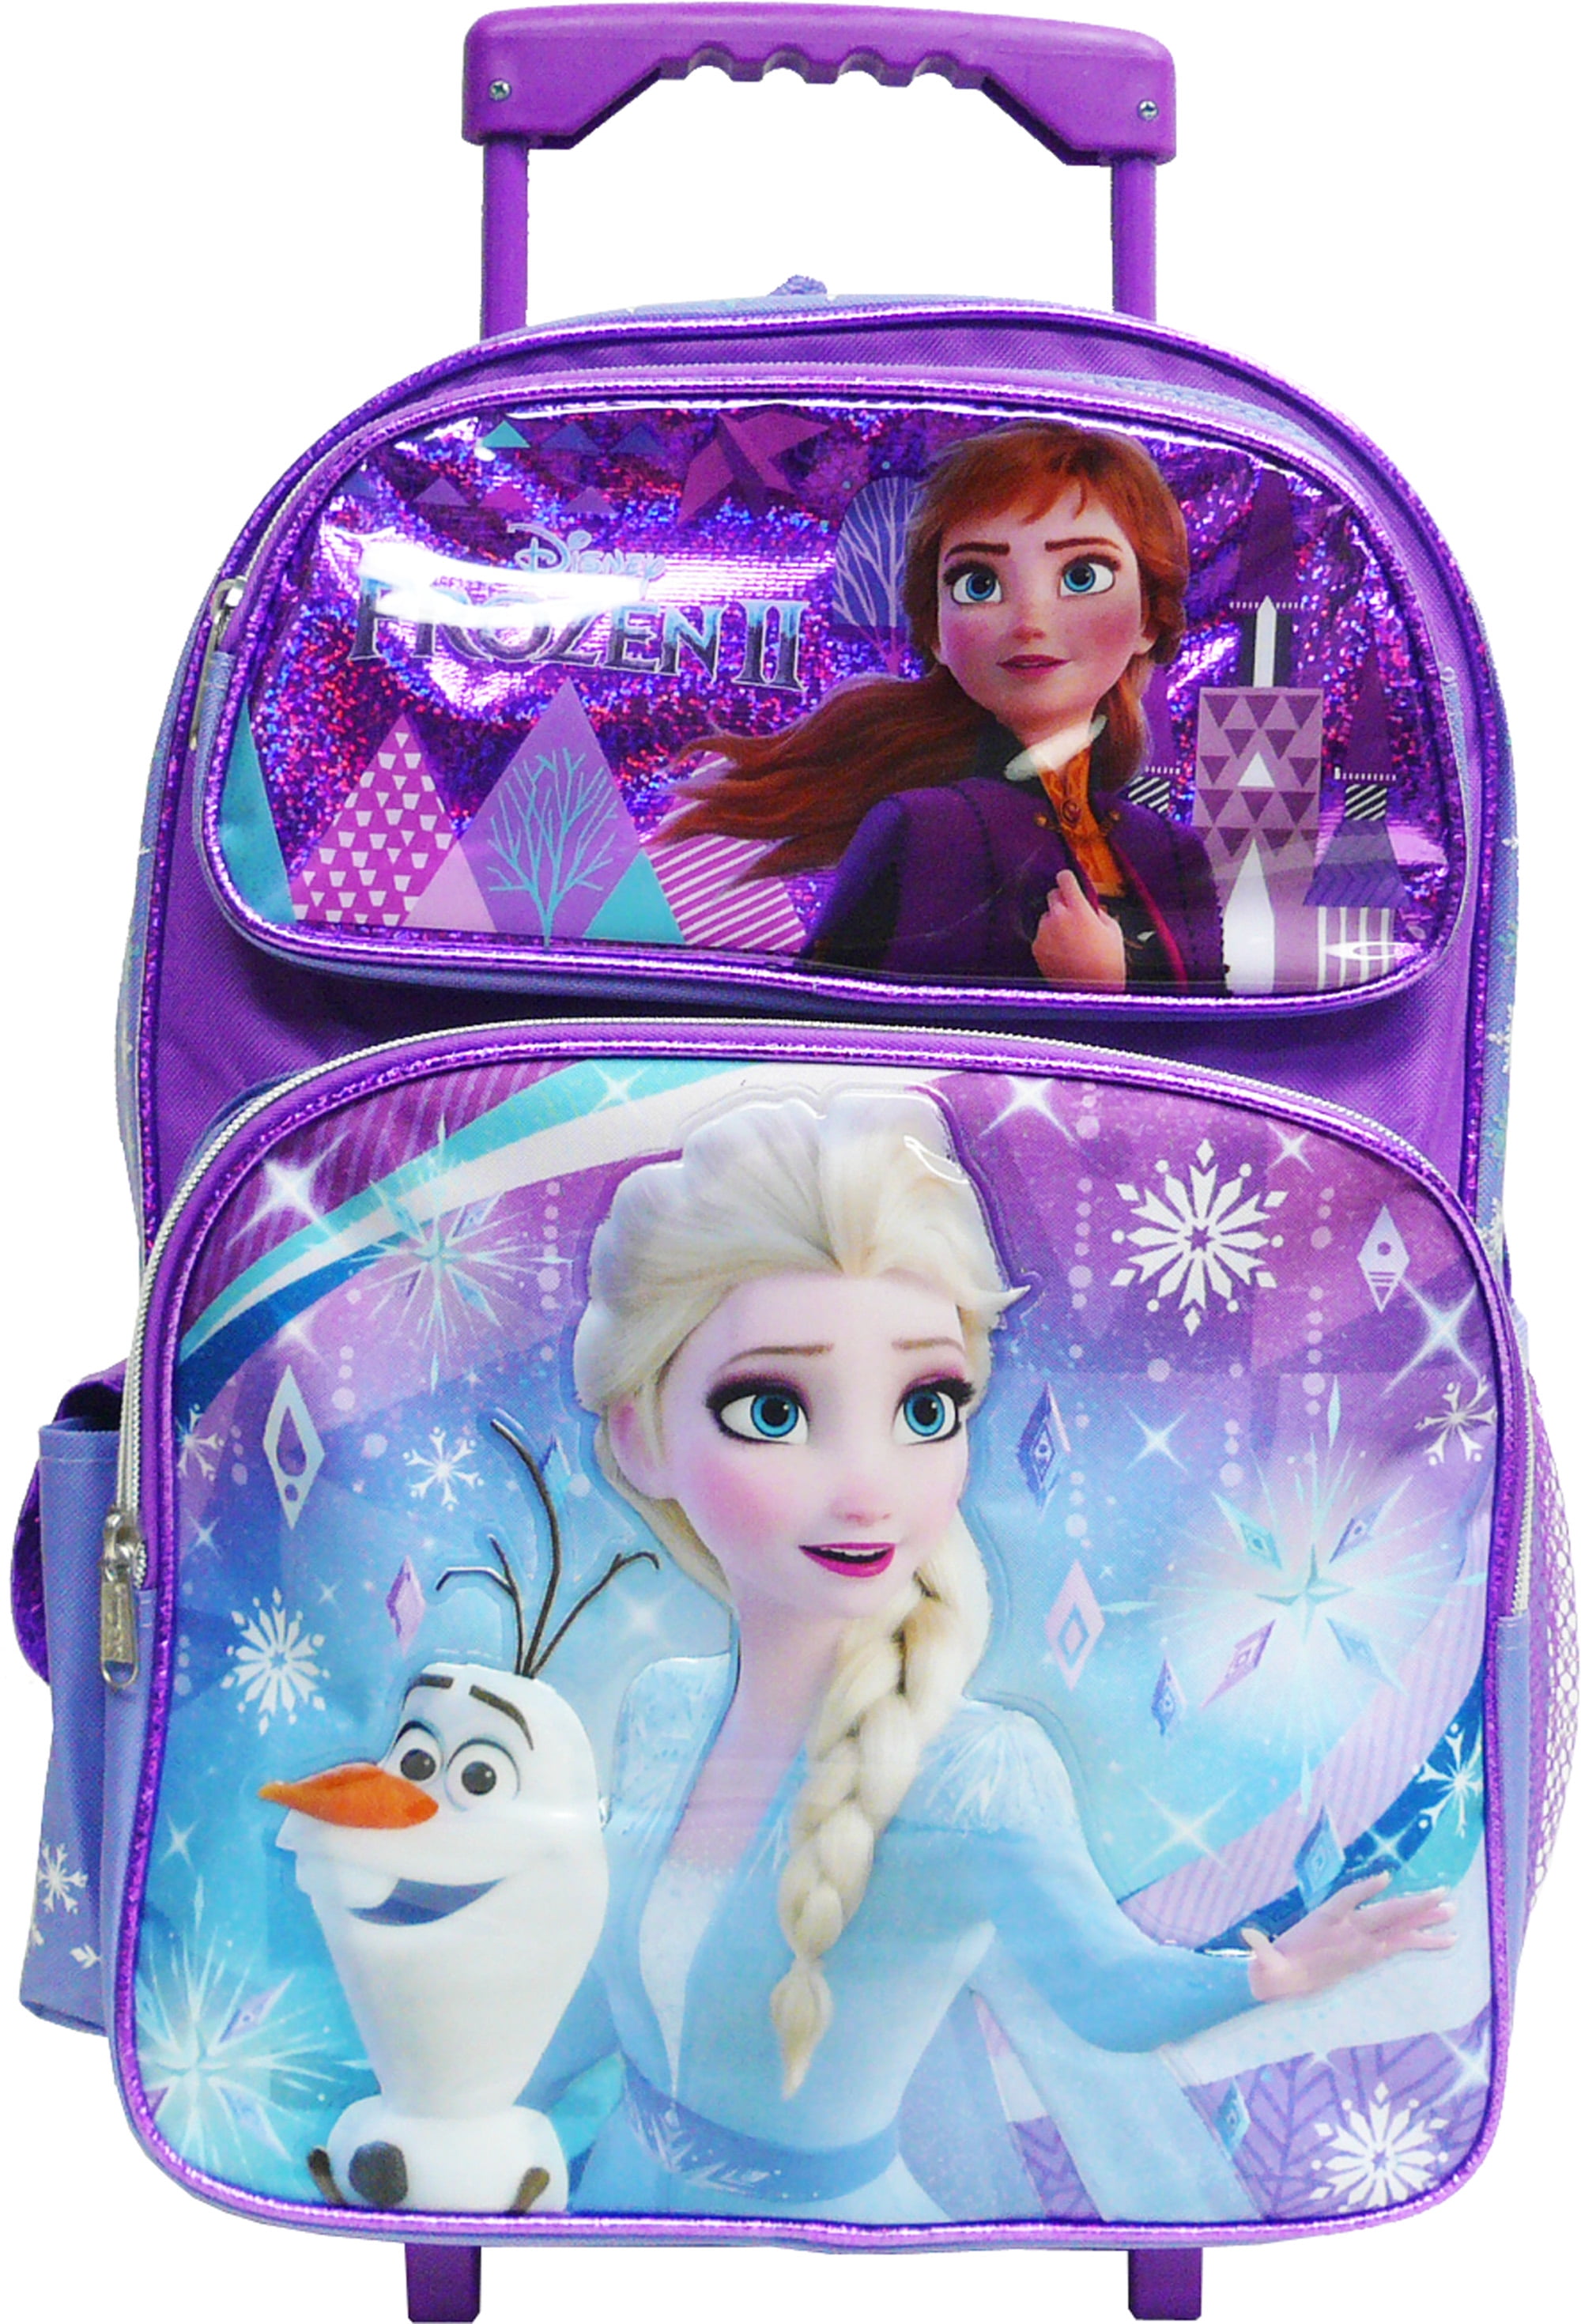 Disney Frozen Anna Elsa 16 Large Rolling School Backpack Girl S Book Bag 5550ff7e 3877 4ecc adc3 0da0a74856cf.33b369893e53ce94d81c306df55551fb